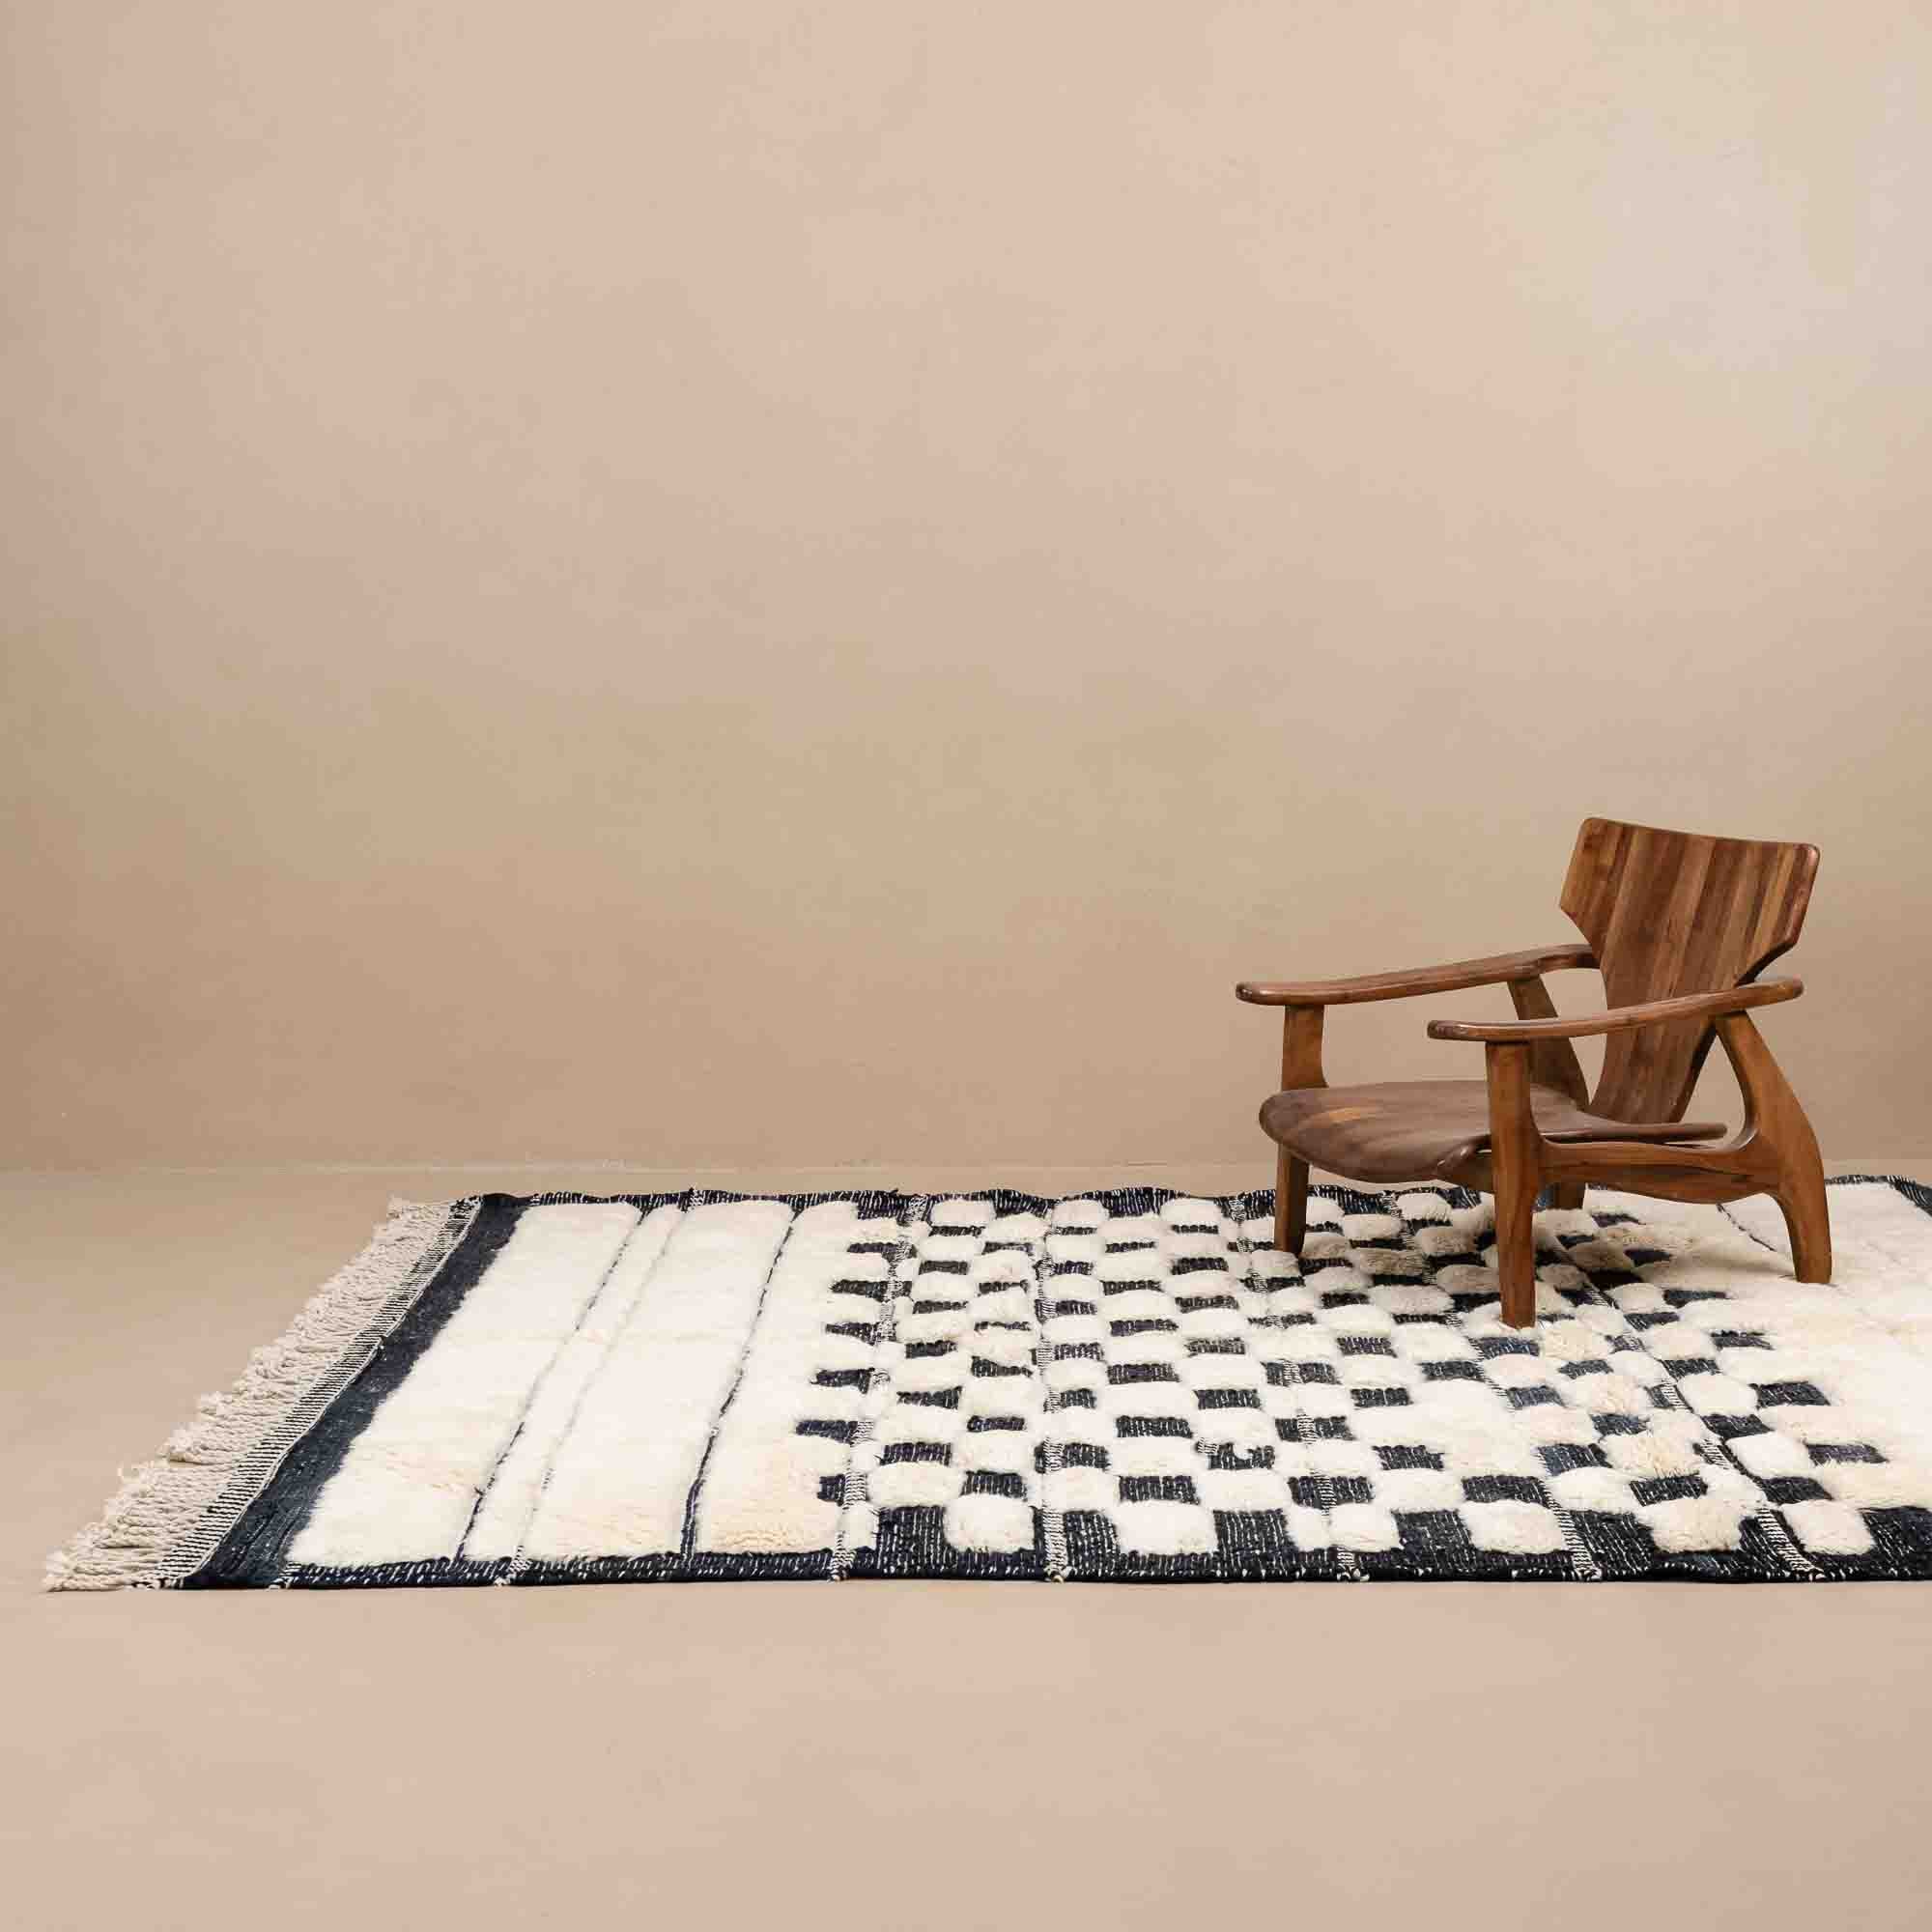 Chic Chessboard - luxury beni mrirt rug - Benisouk